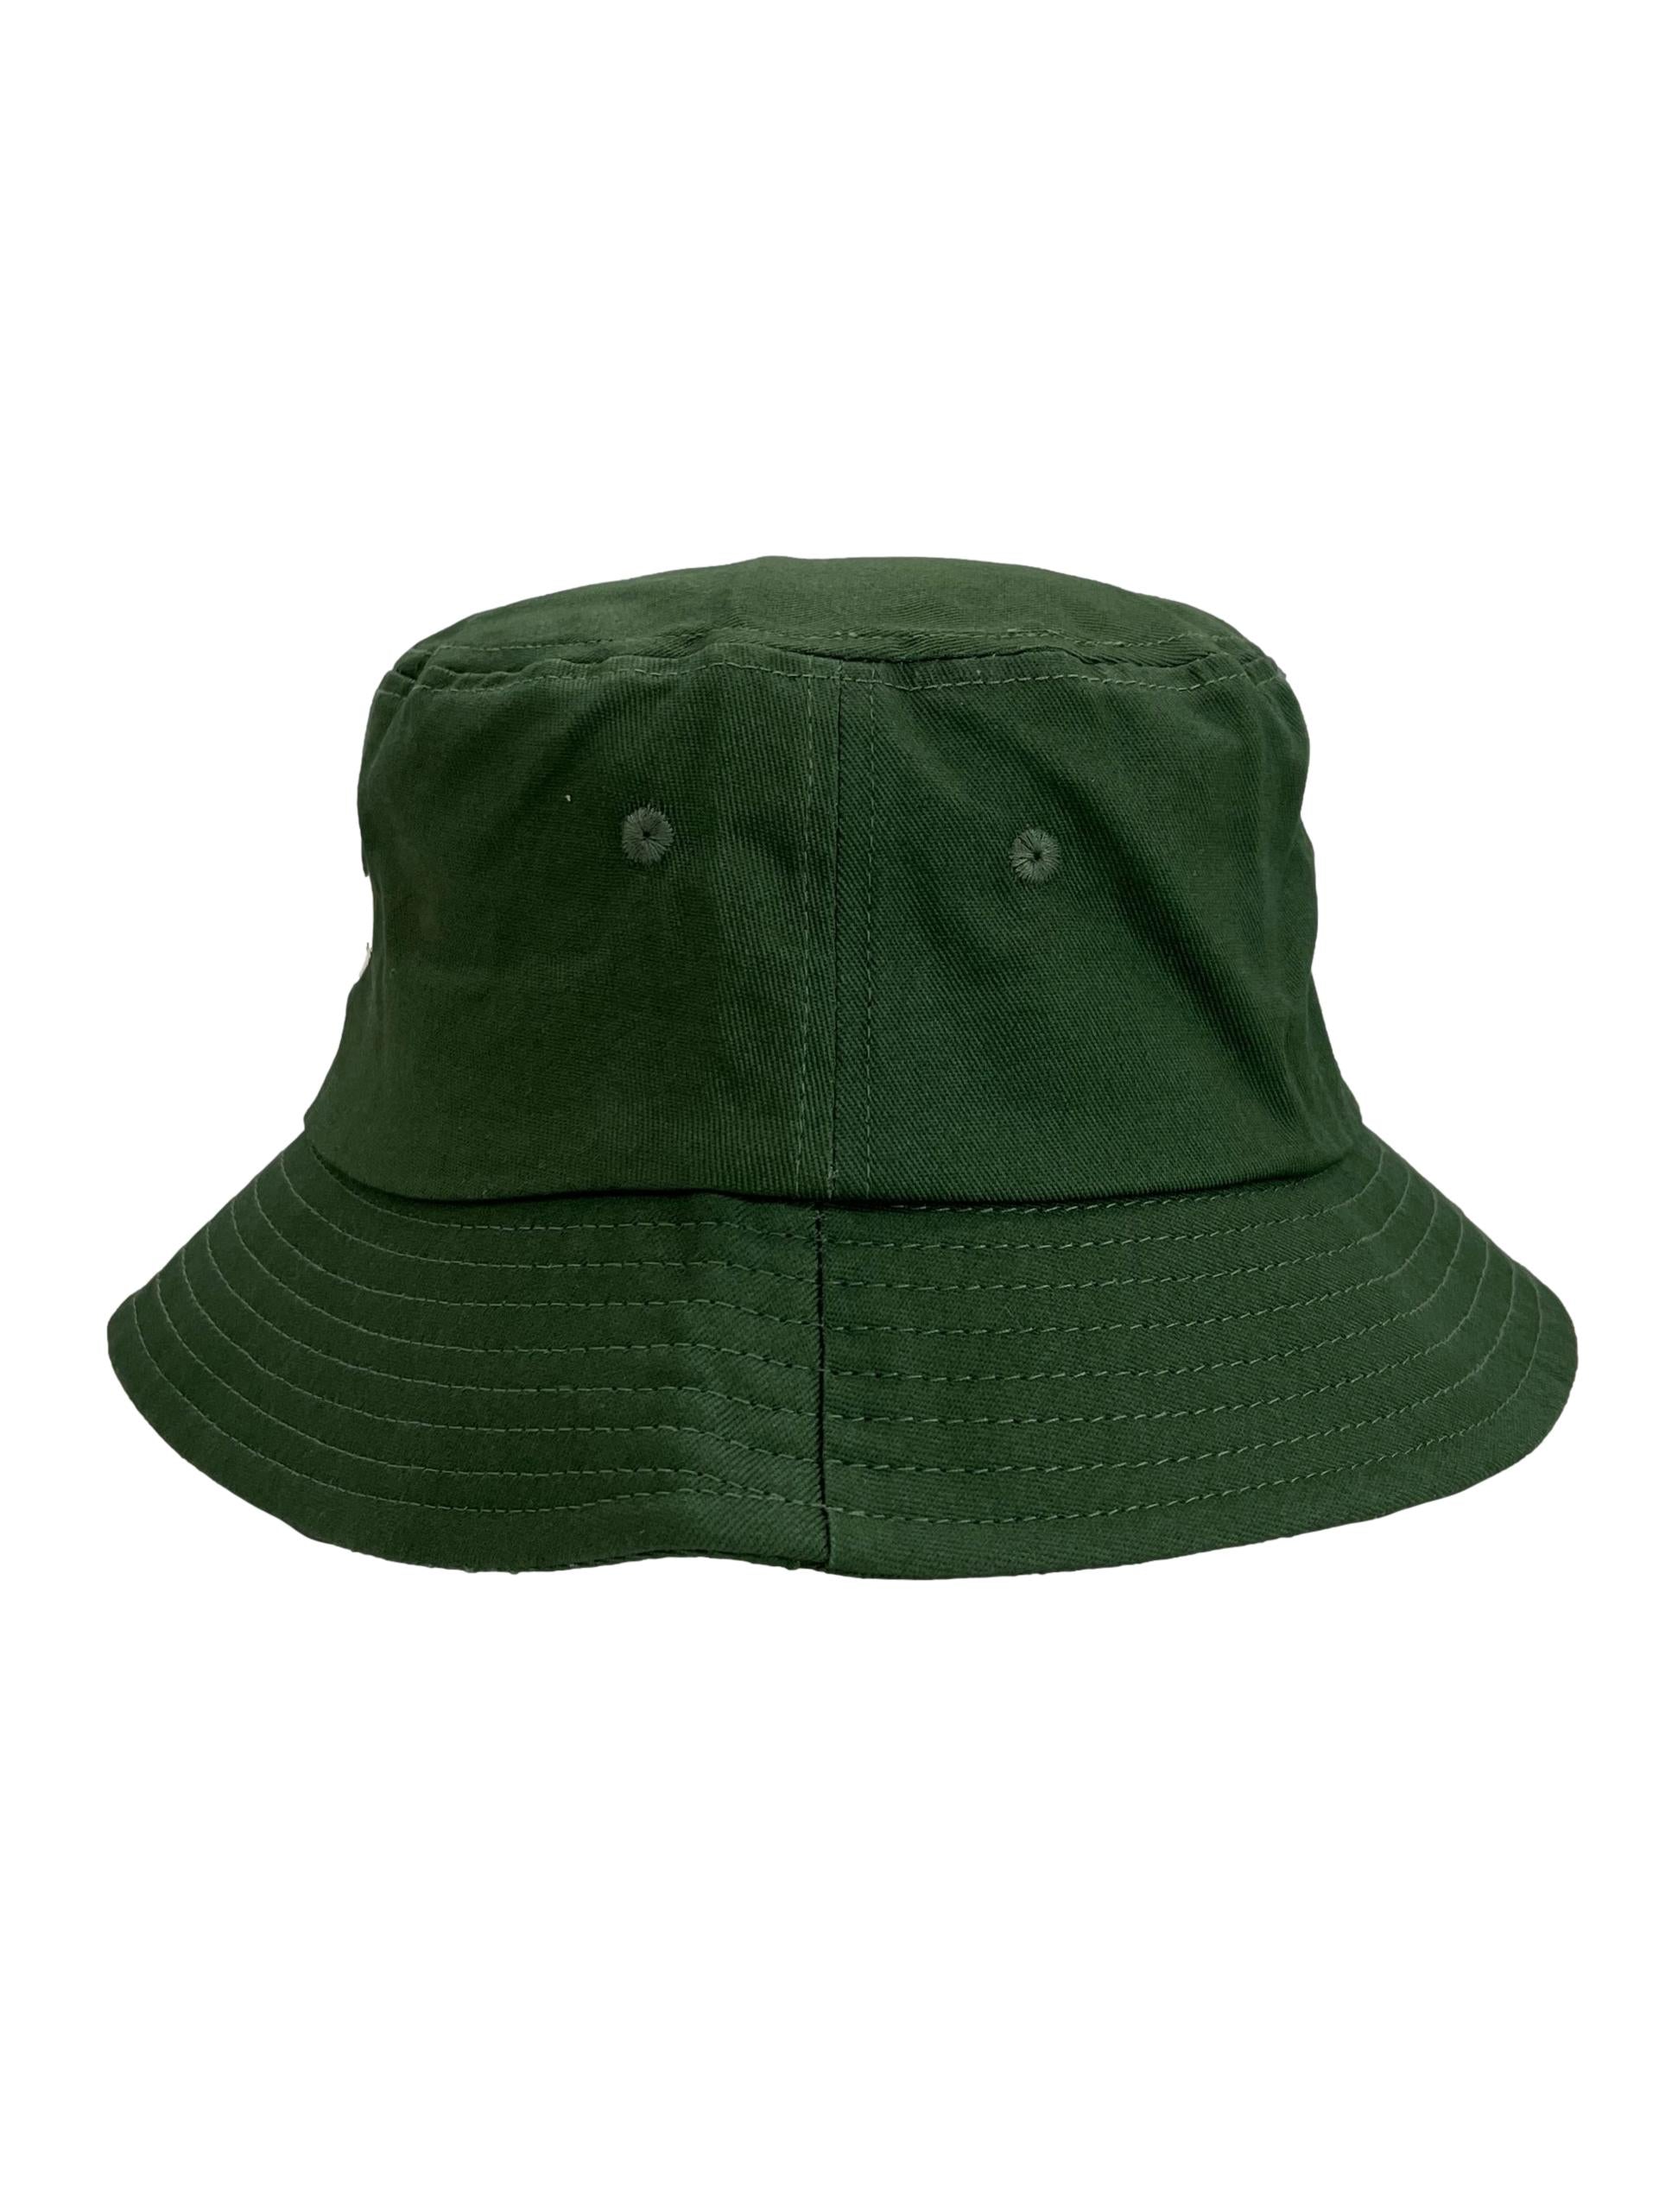 Green Kai All Power Up Bucket Hat